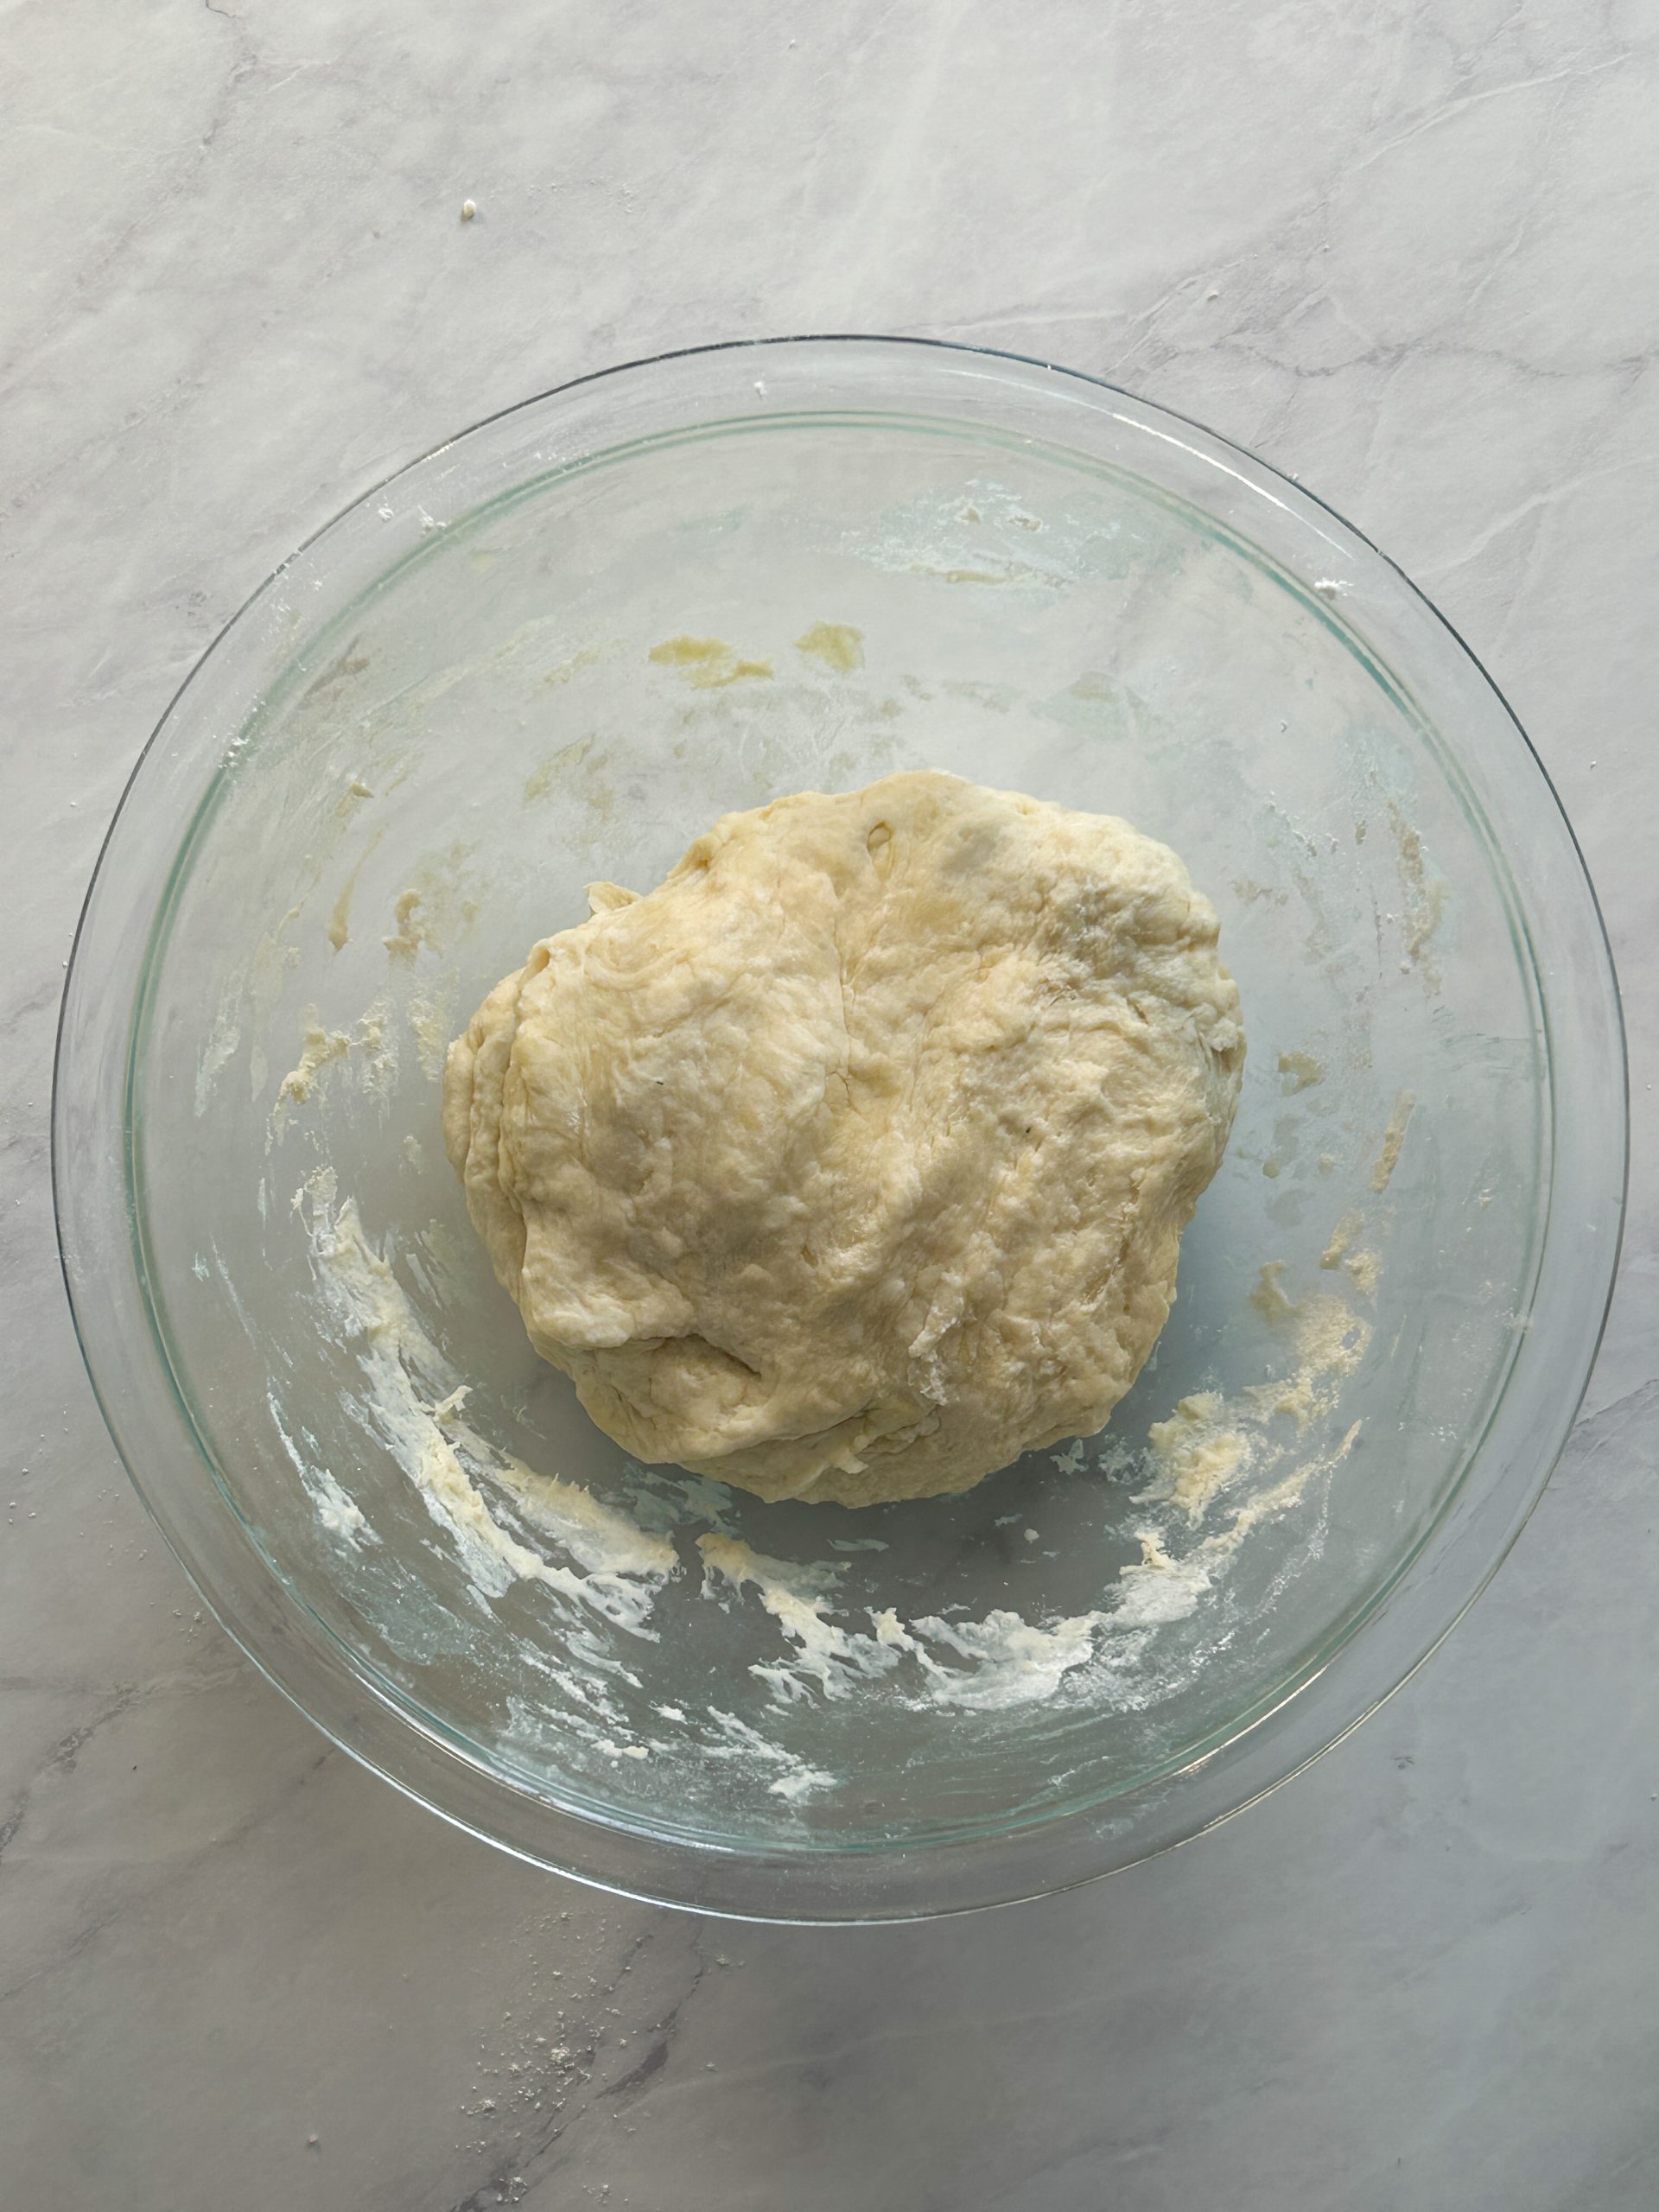 kachori pastry dough in a glass bowl